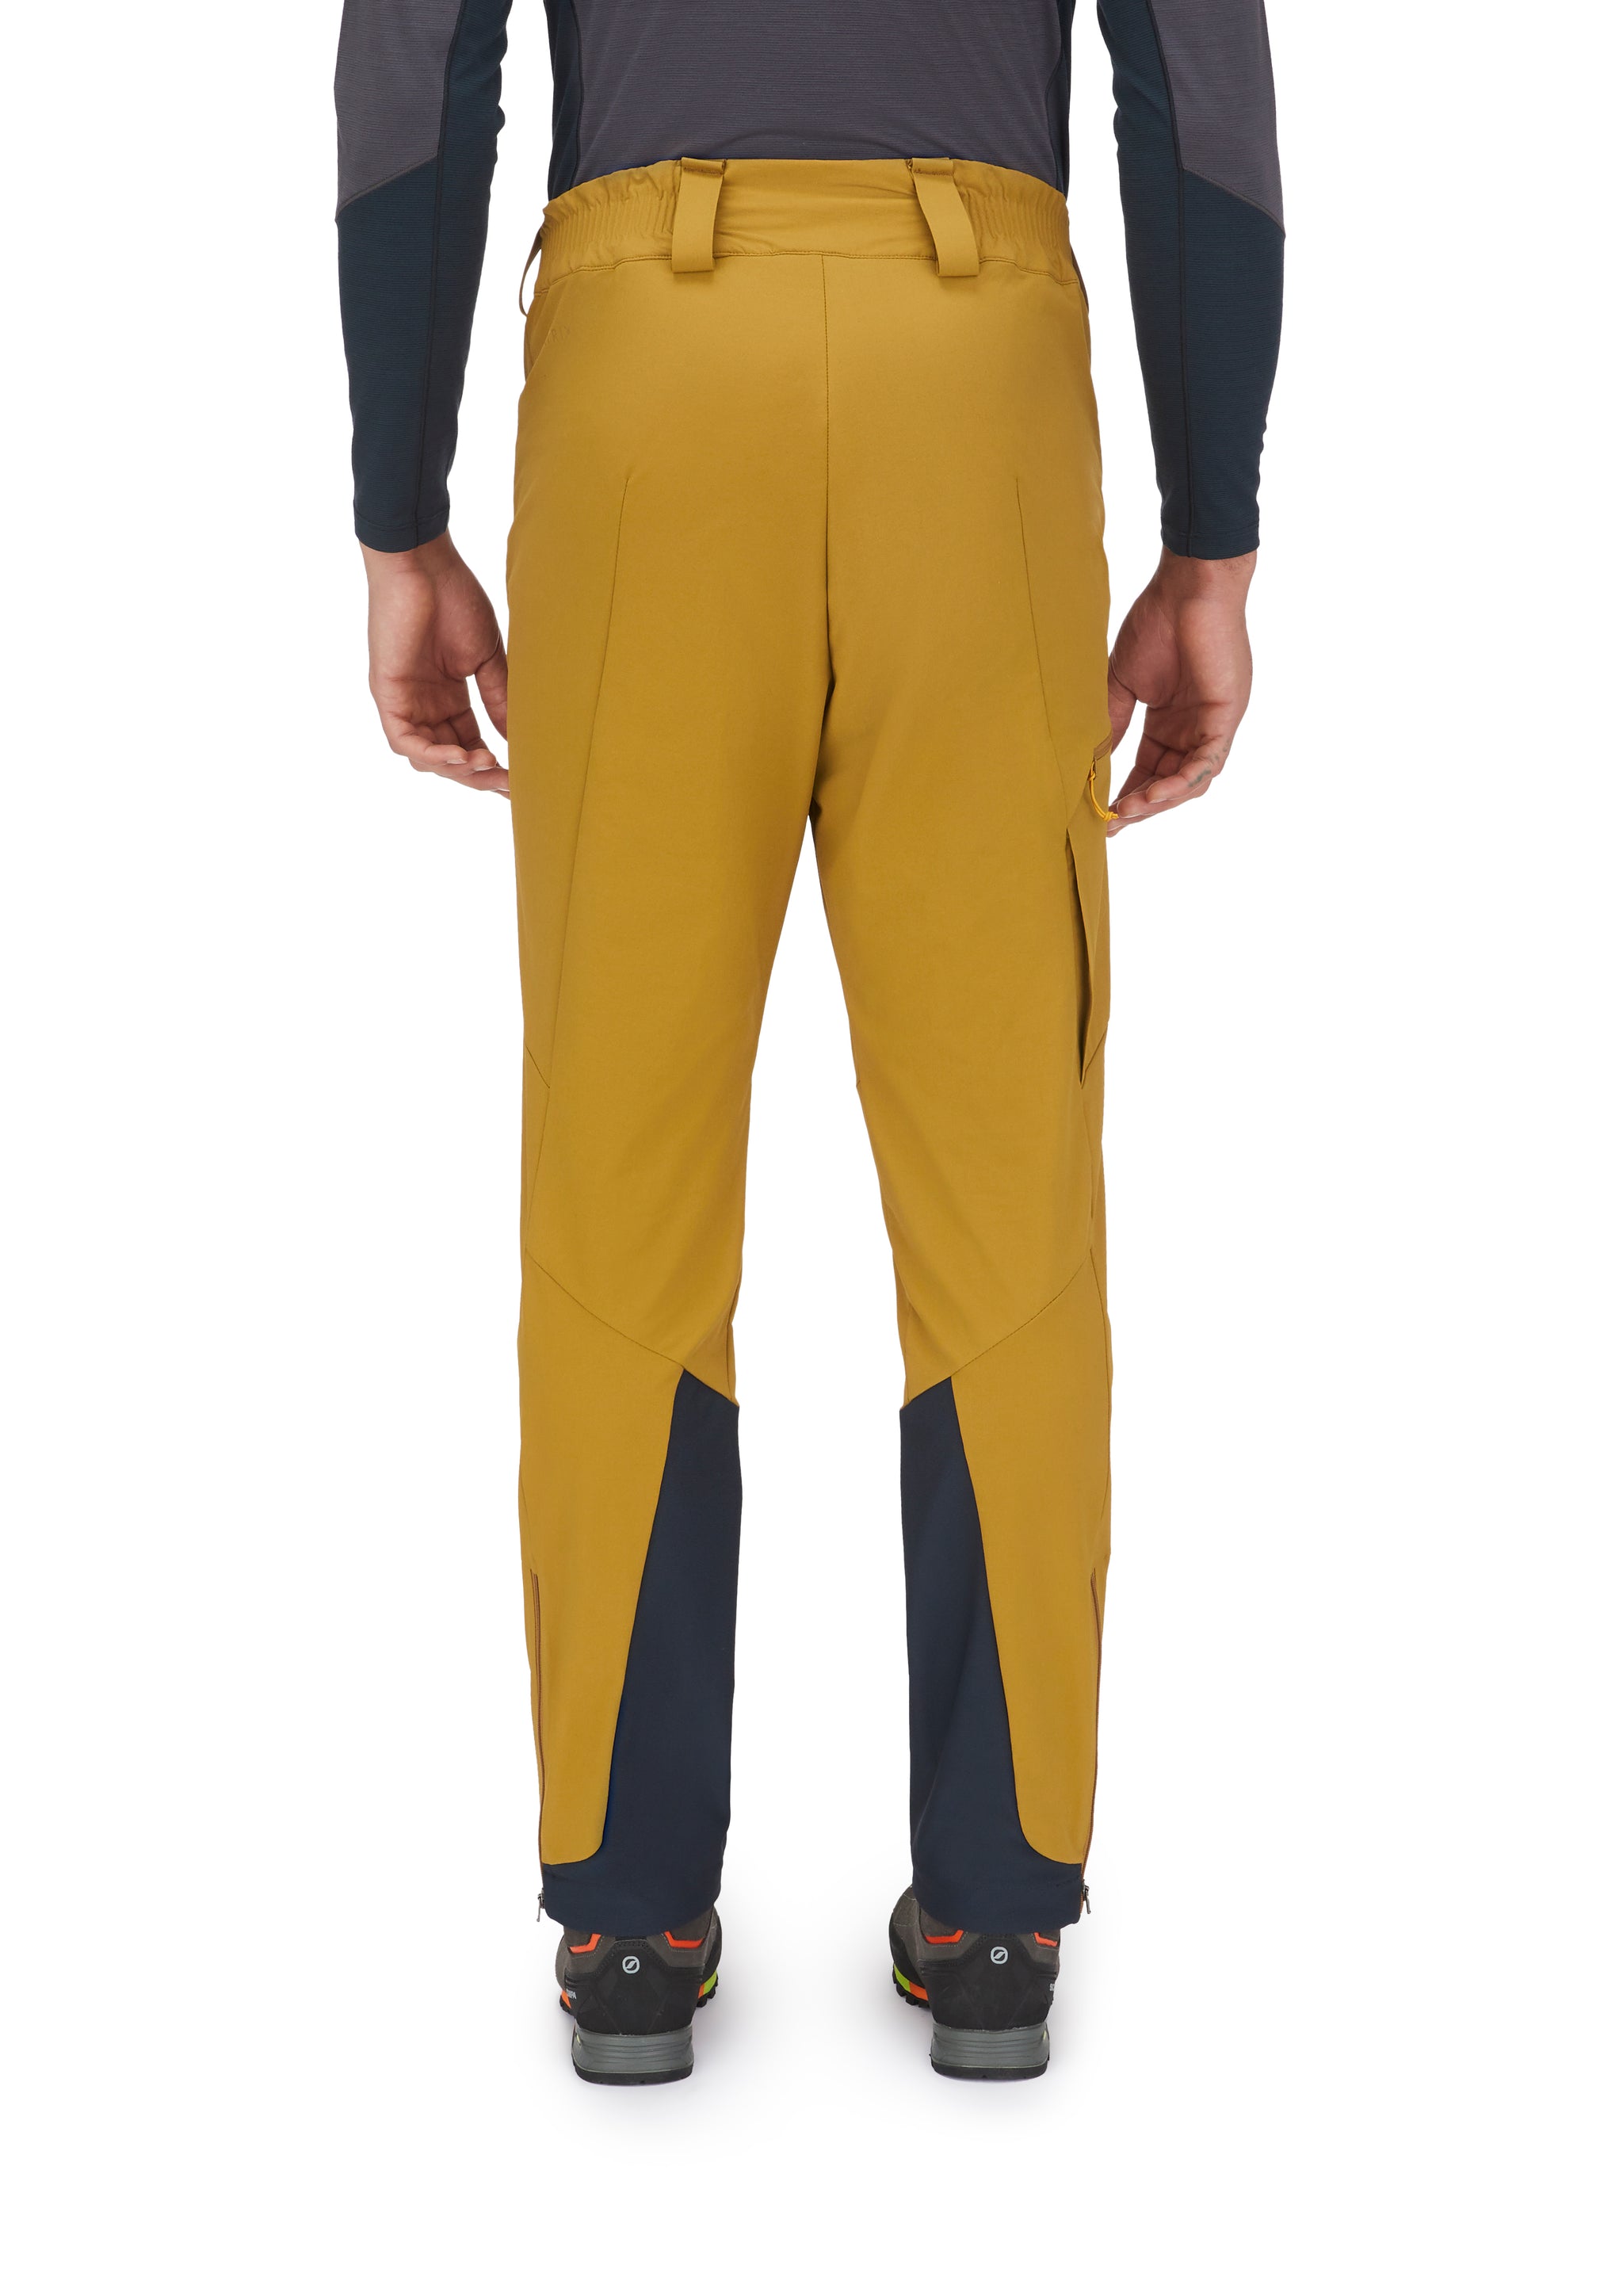 Rab Men's Ascendor Light Pants - Outfitters Store